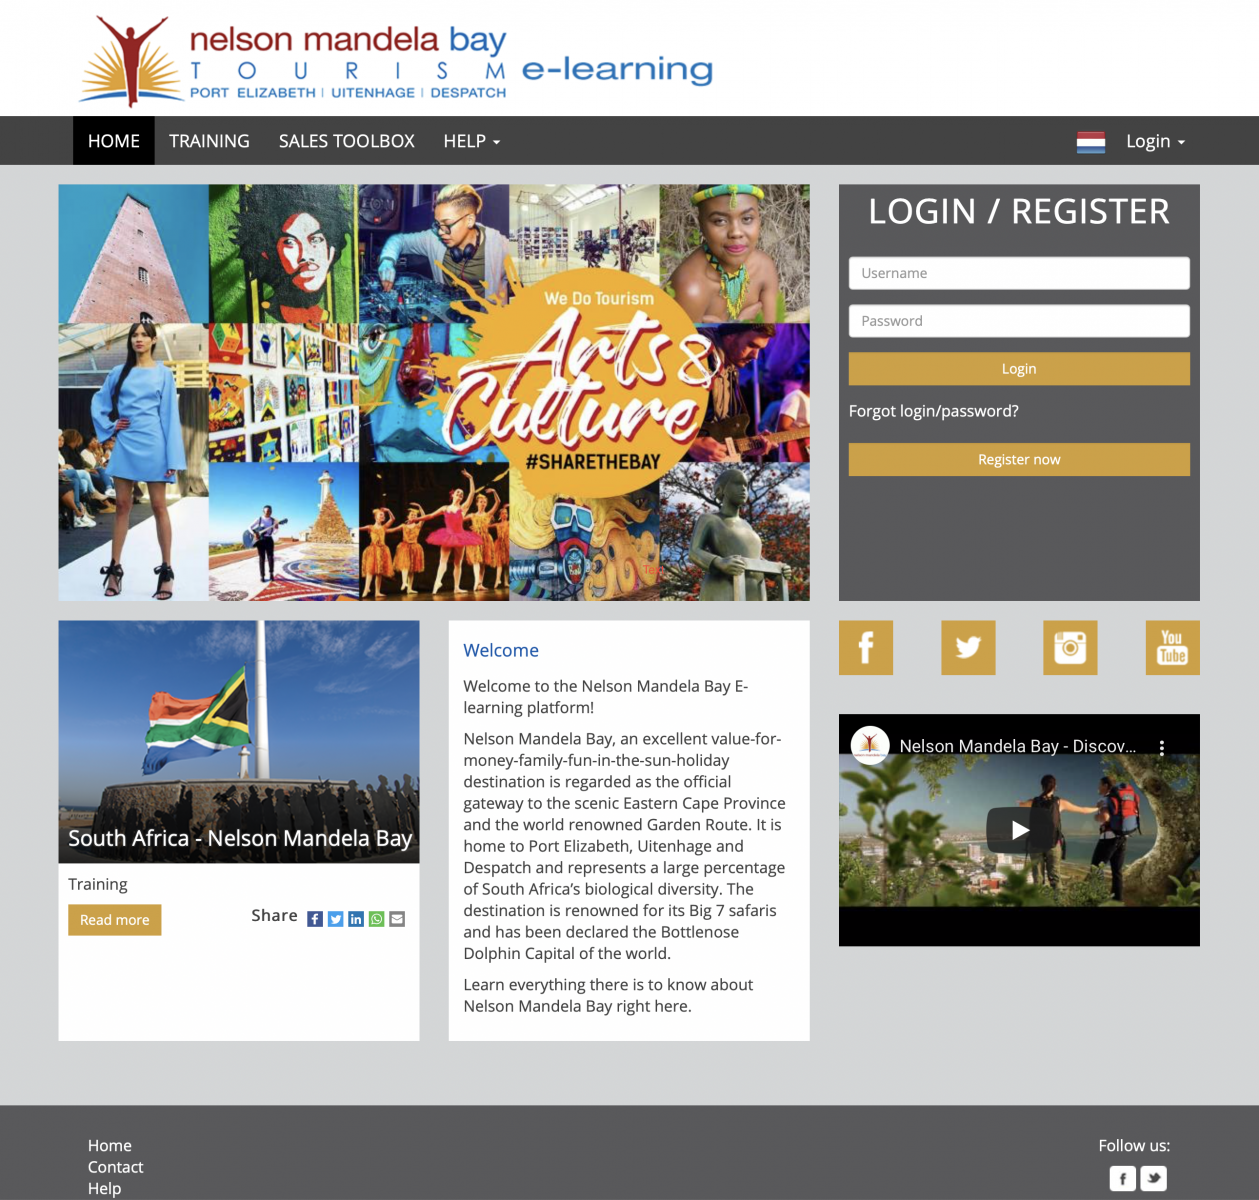 Nelson Mandela Bay E-learning platform Port Elizabeth destination training